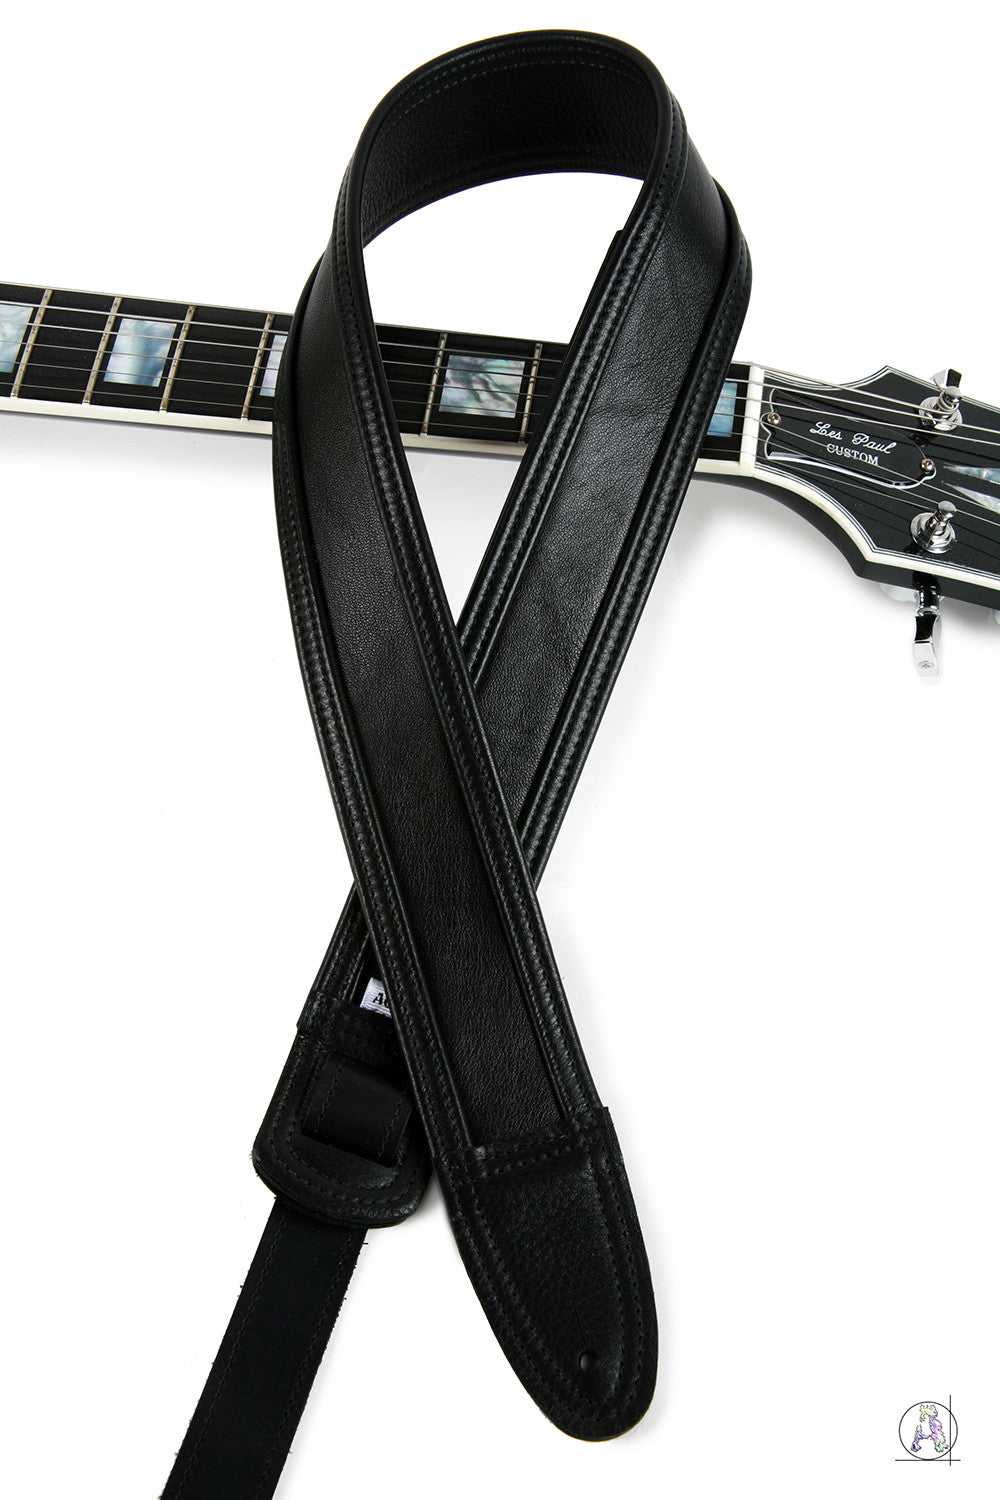 Blackheart 80 - Soft Cabretta Leather and Black Cowhide Guitar Strap